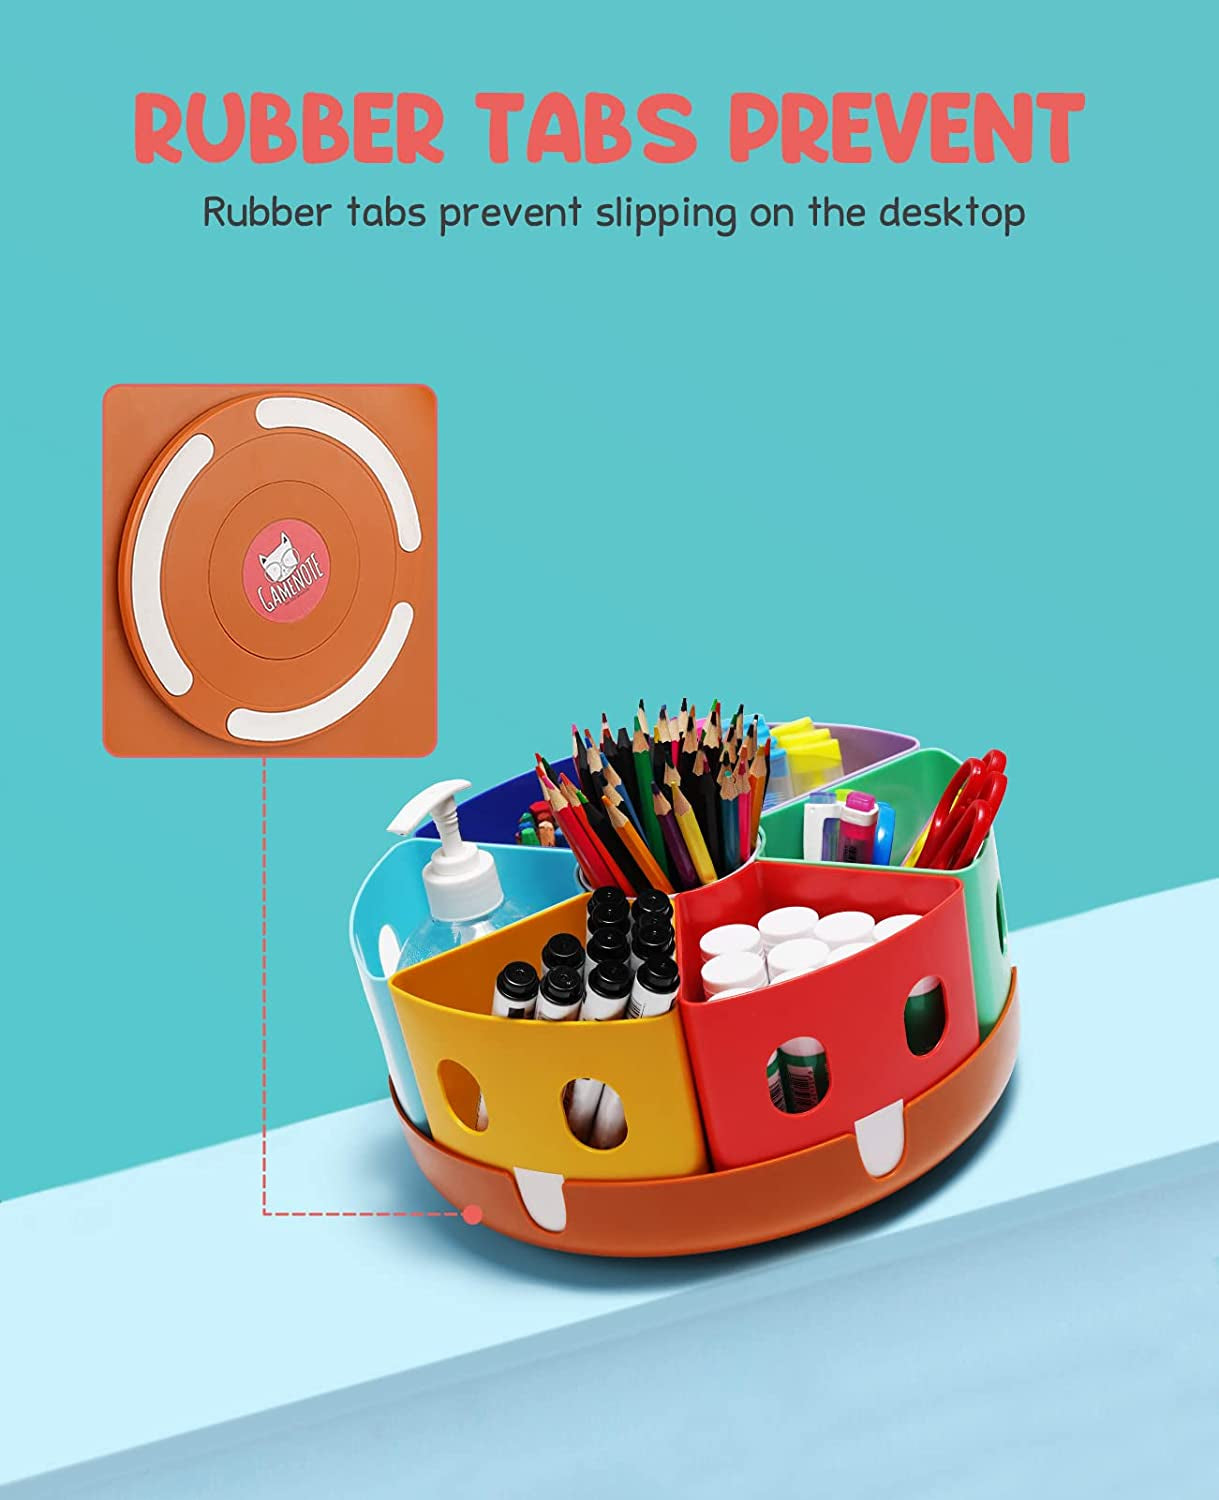 Rotating Art Supply Organizer - Lazy Susan Office School Supplies for Kids Desk Organizers and Storage Homeschool Craft Caddy Classroom Organization (Large)